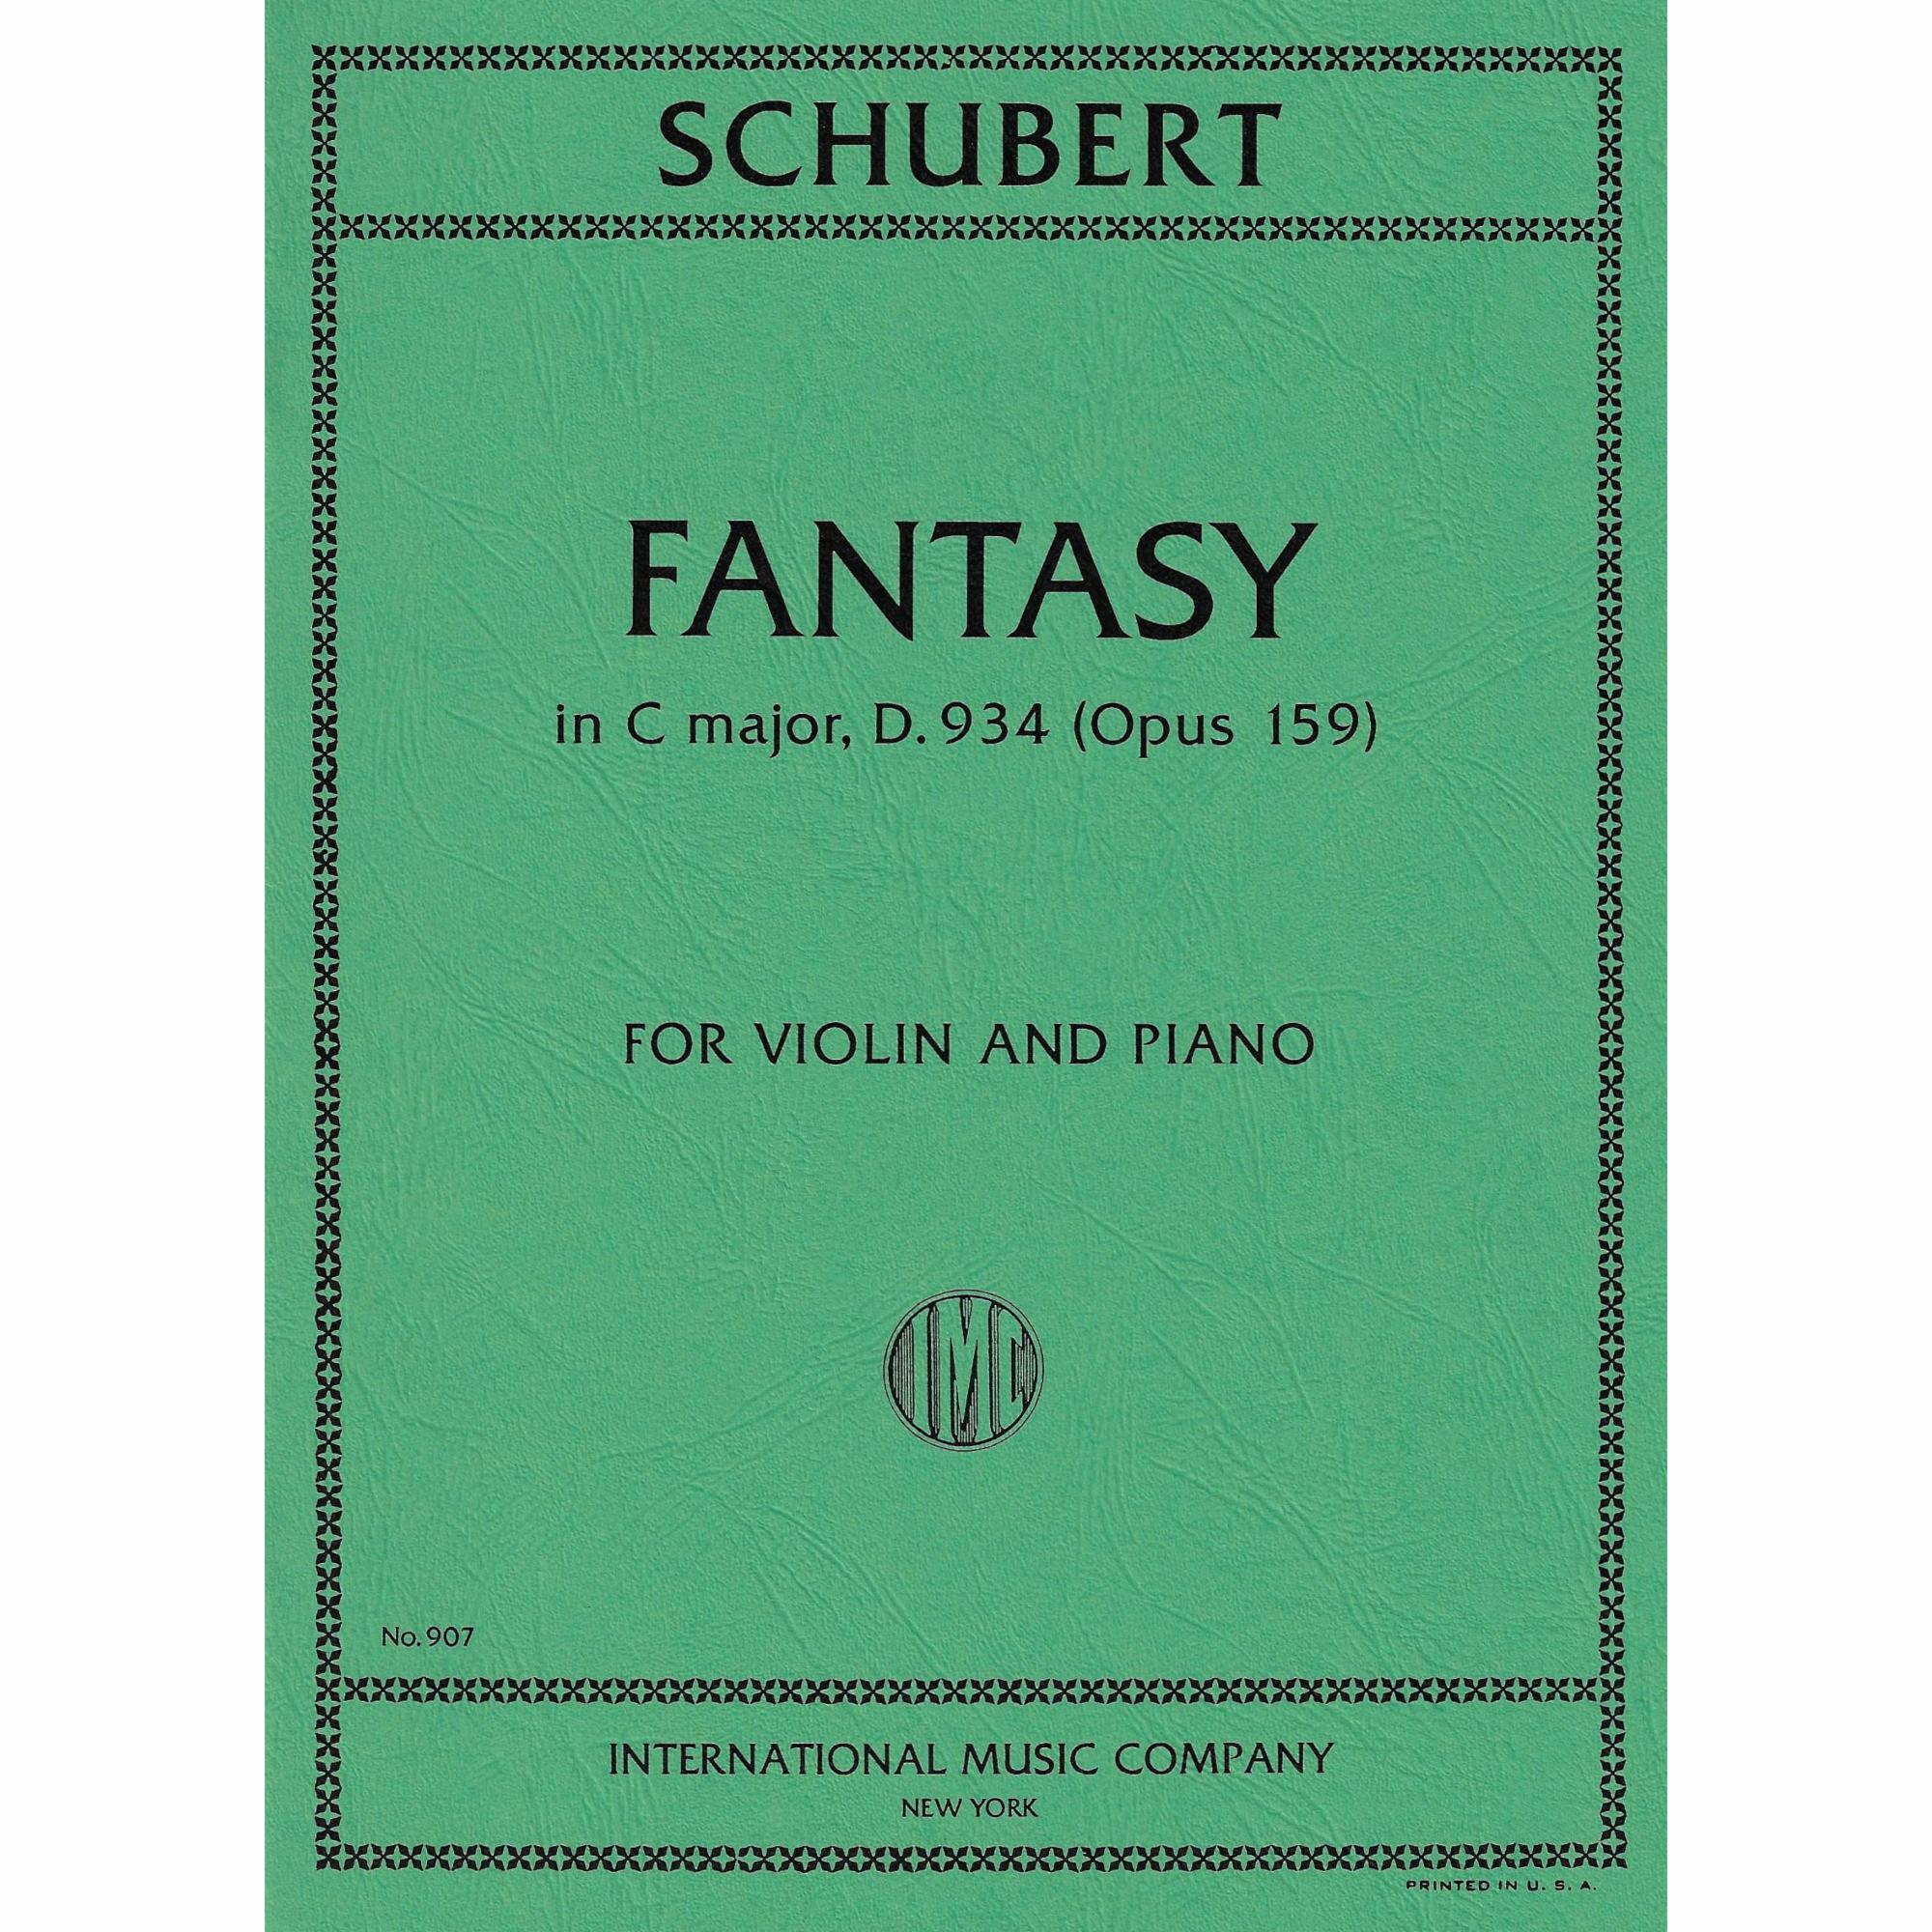 Fantasy in C Major, D. 934 for Violin and Piano